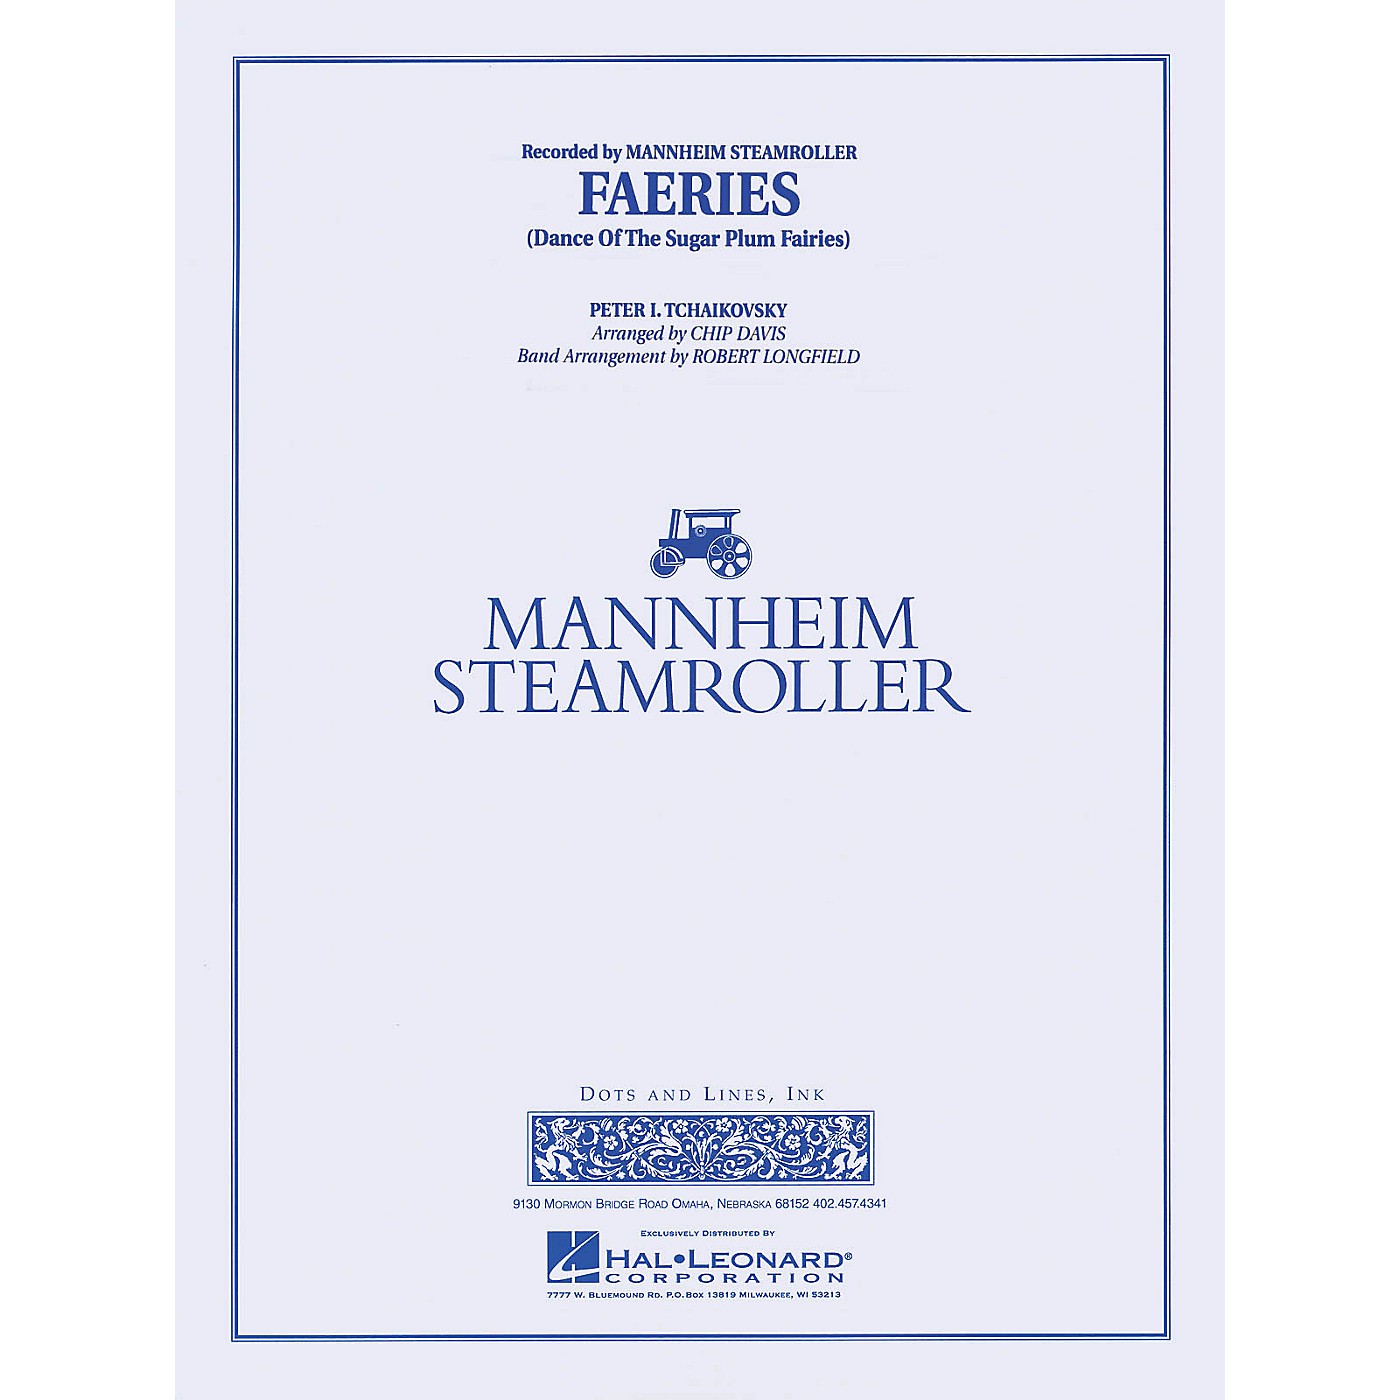 Mannheim Steamroller Faeries from The Nutcracker Concert Band Level 3-4 by Mannheim Steamroller Arranged by Robert Longfield thumbnail